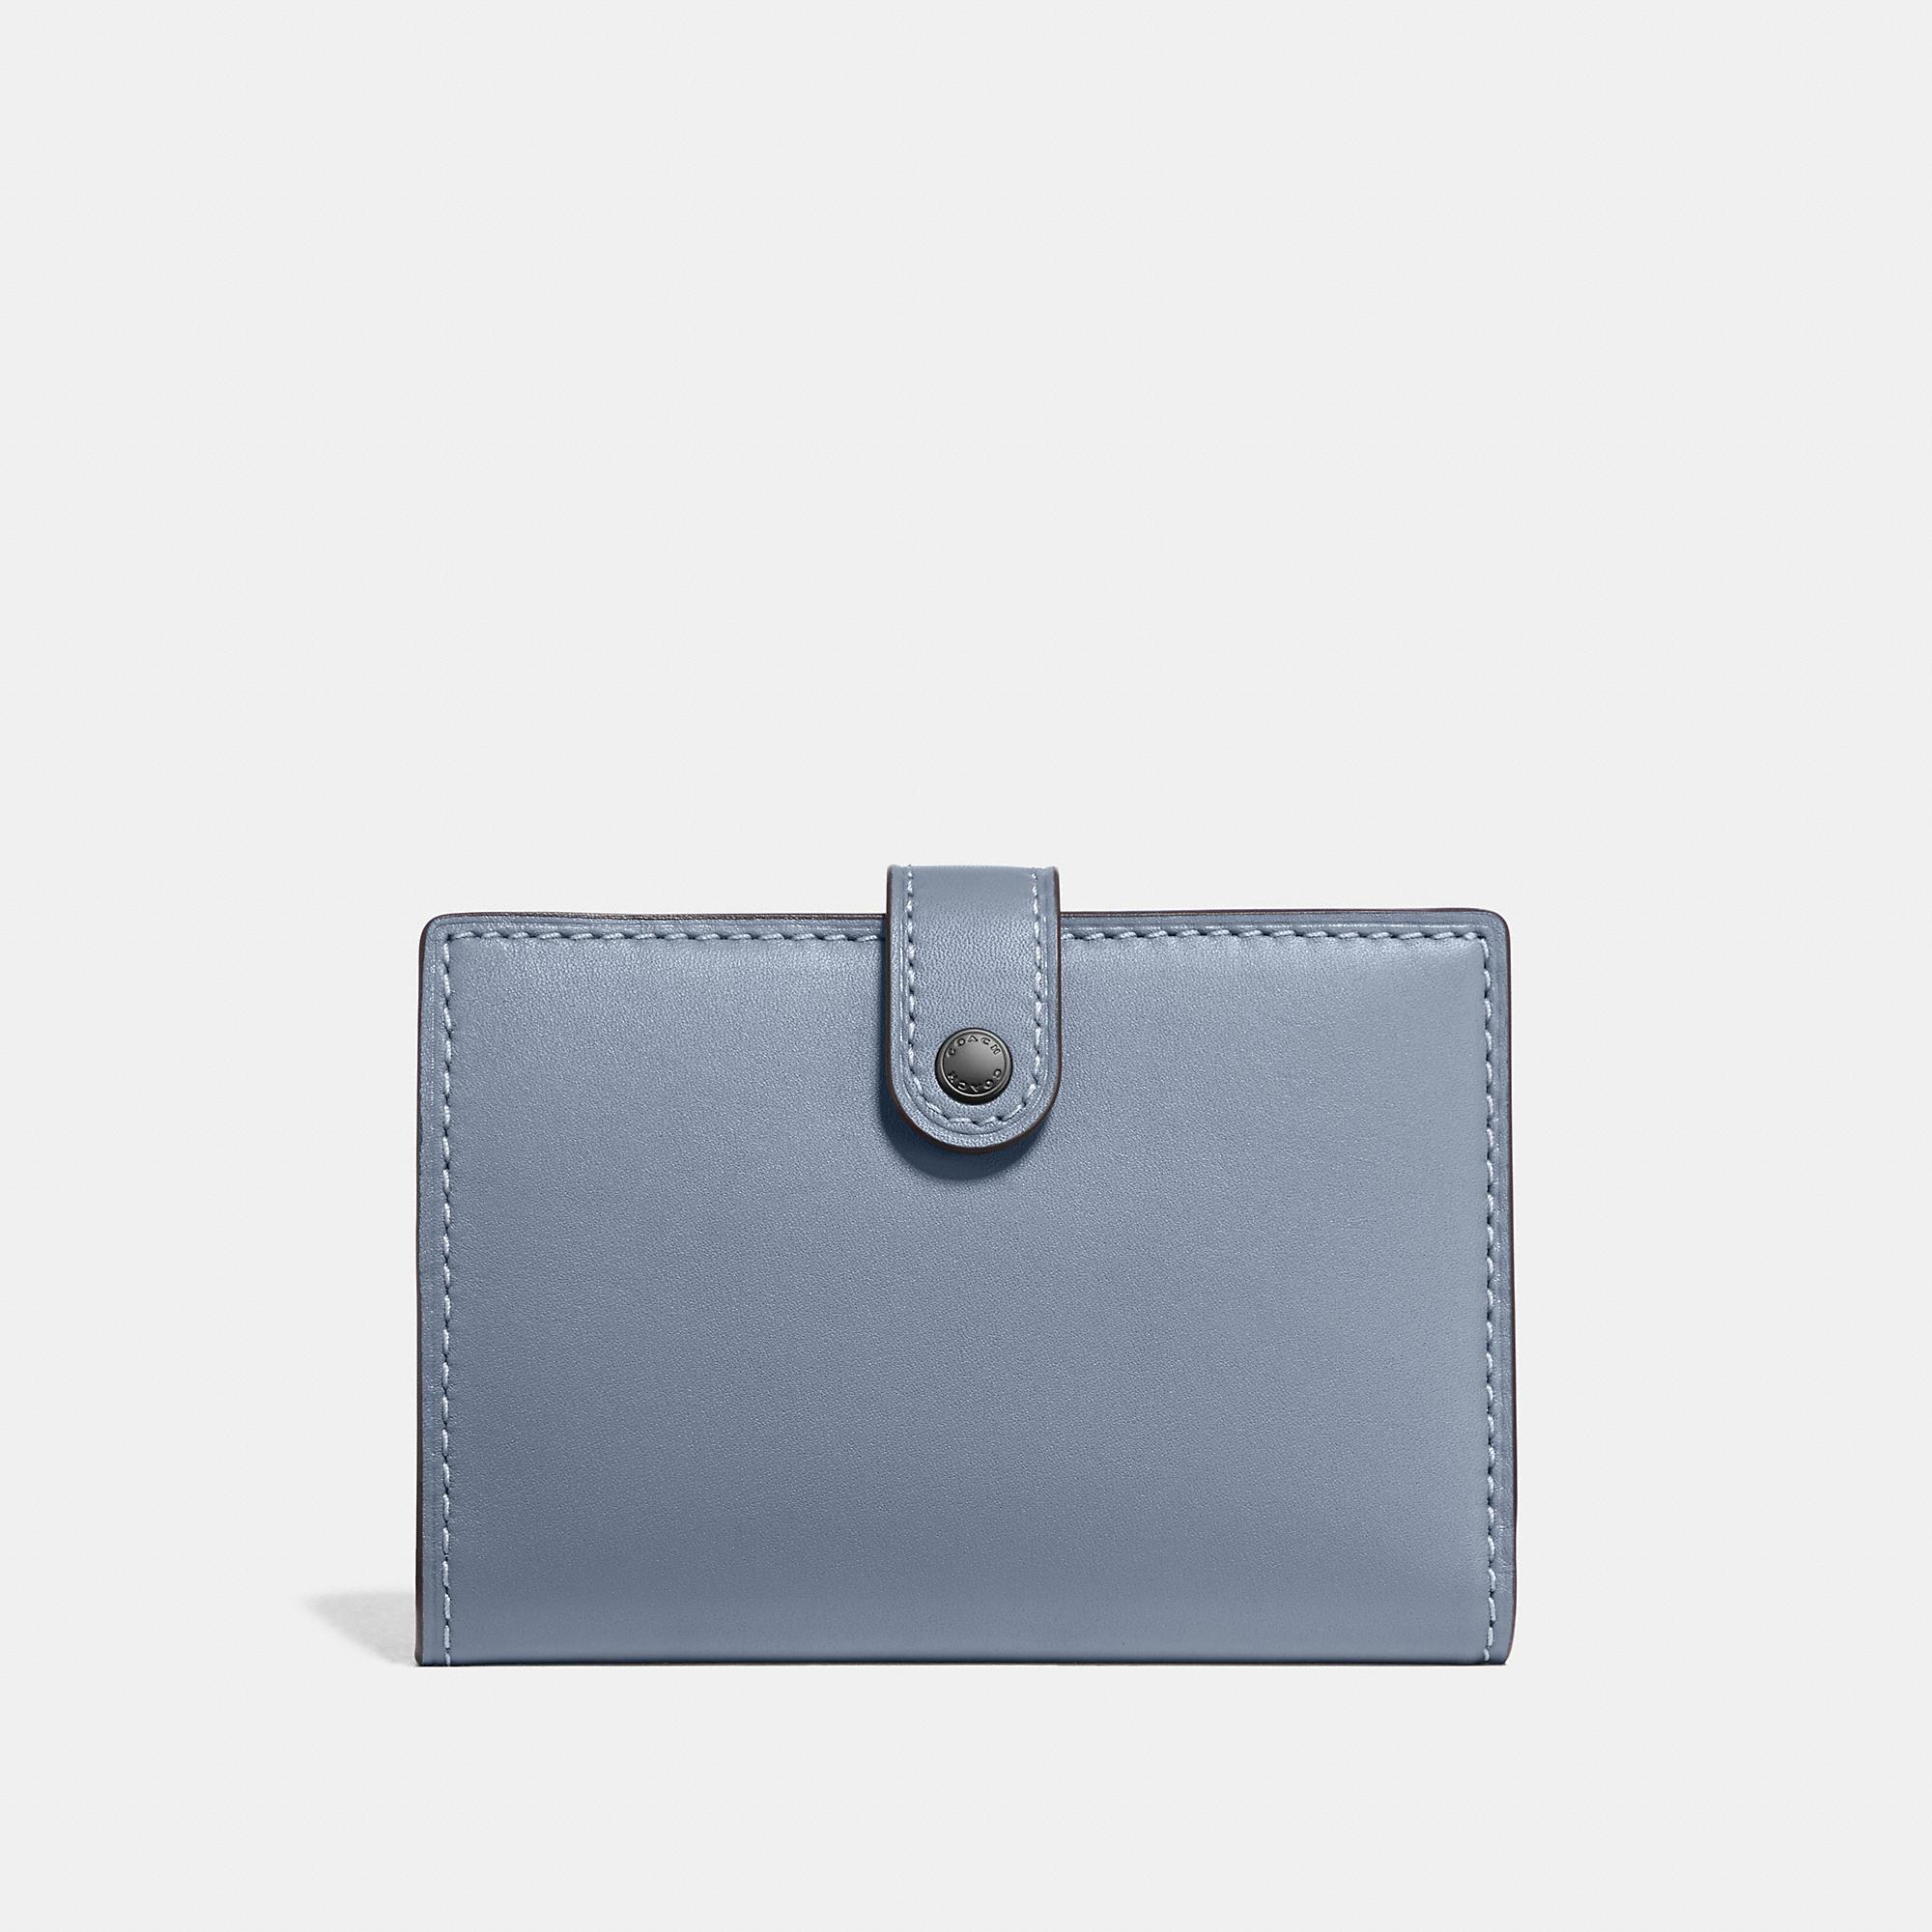 COACH Small Bifold Wallet in Blue - Lyst